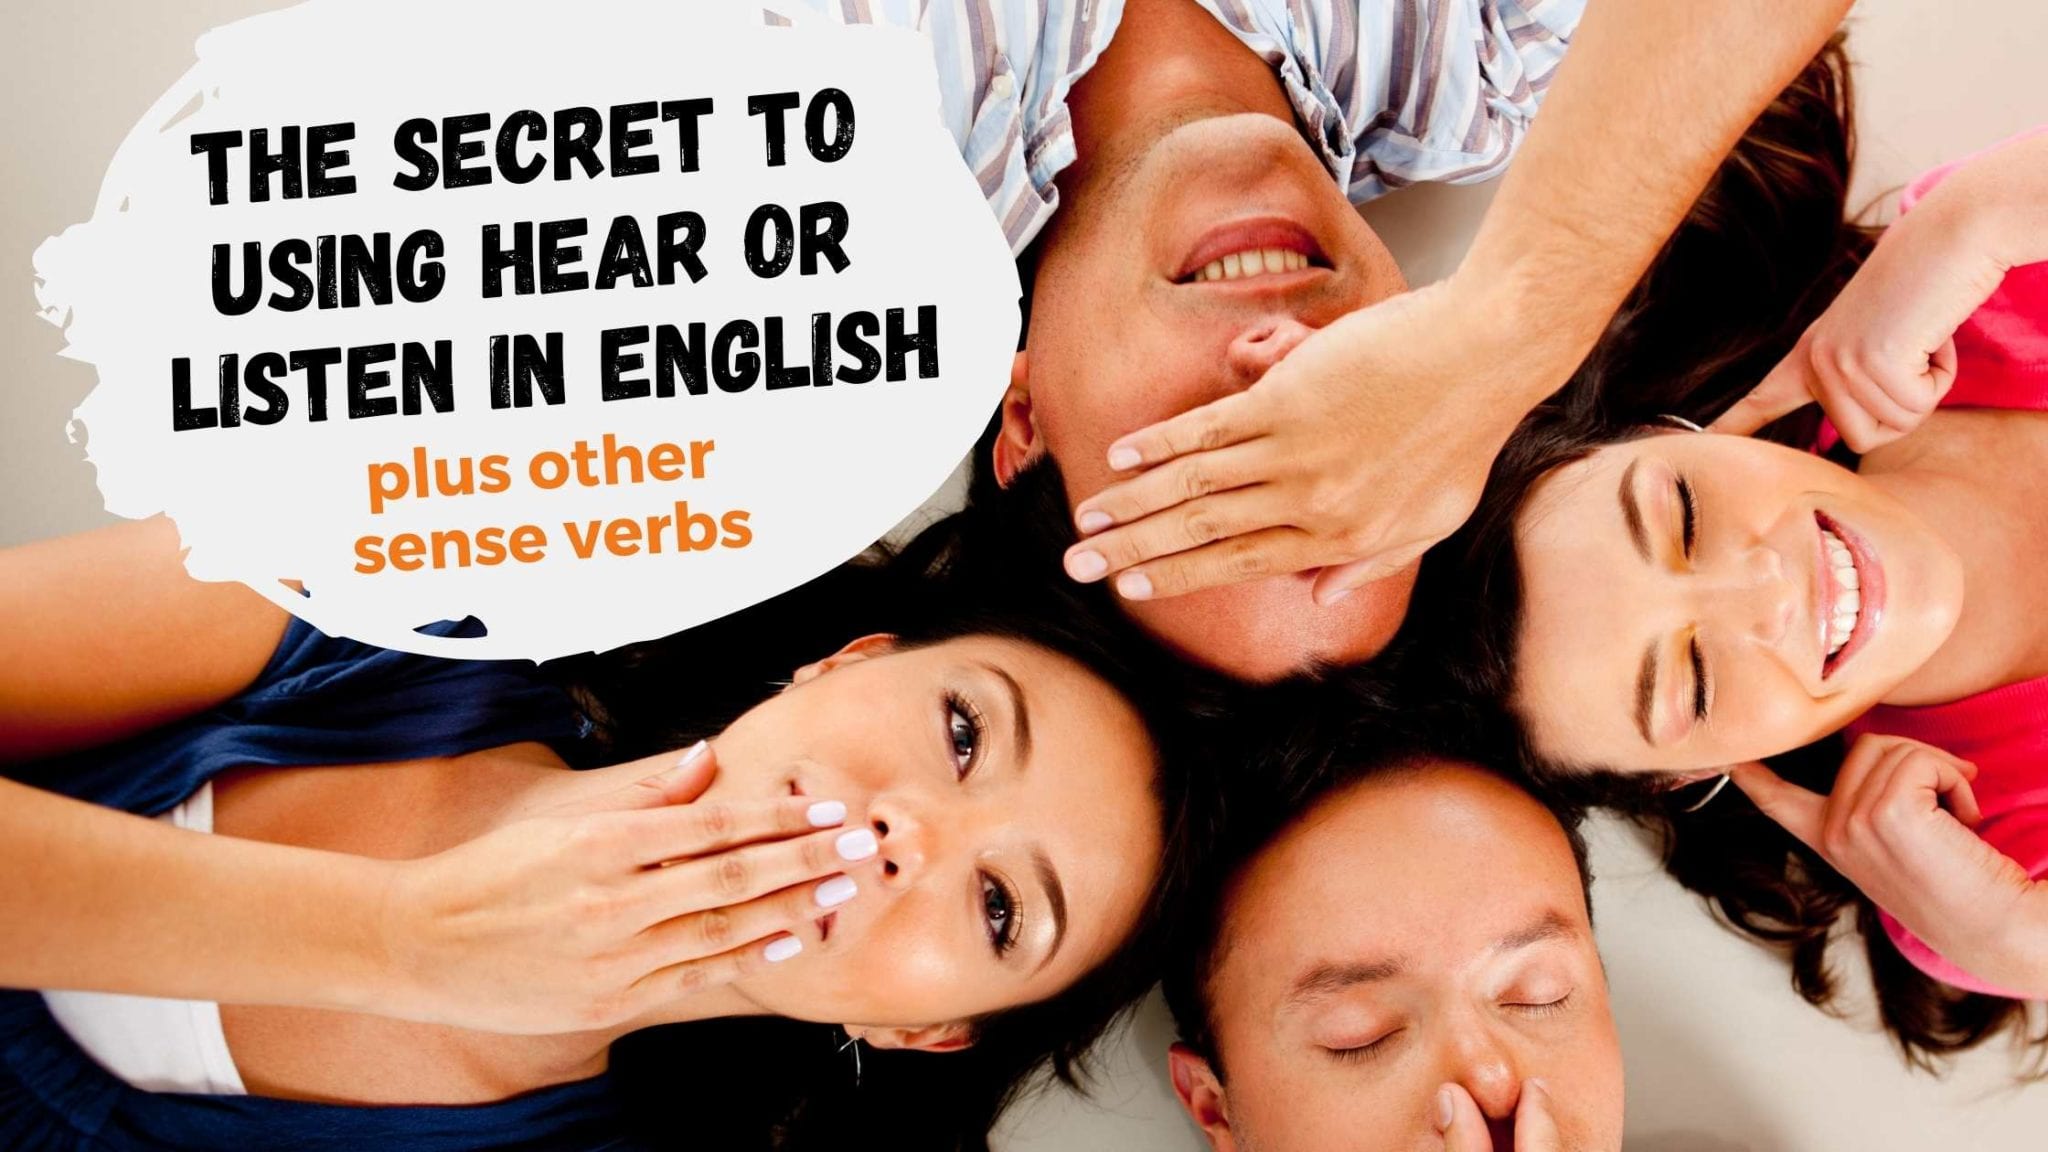 sense-verbs-in-english-prepeng-online-english-school